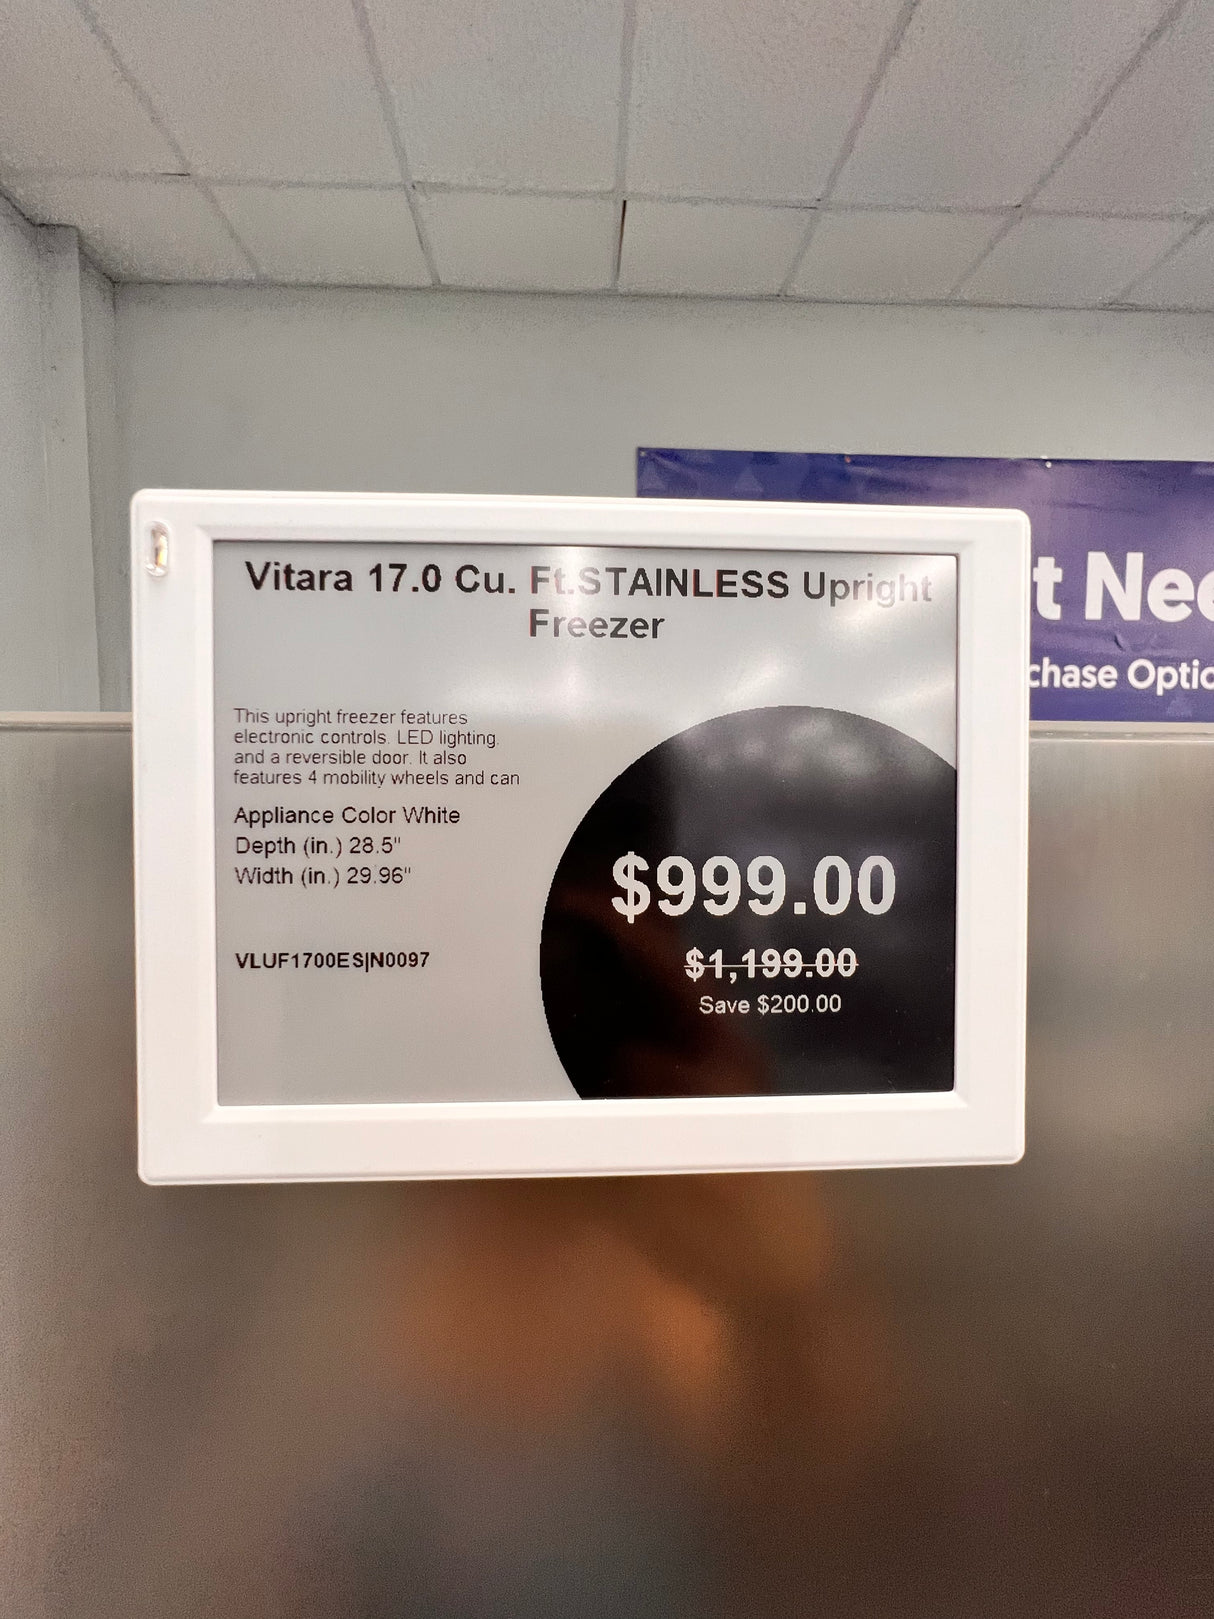 VITARA 17.0 ft.³ stainless upright freezer VLUF 1700ES/SD